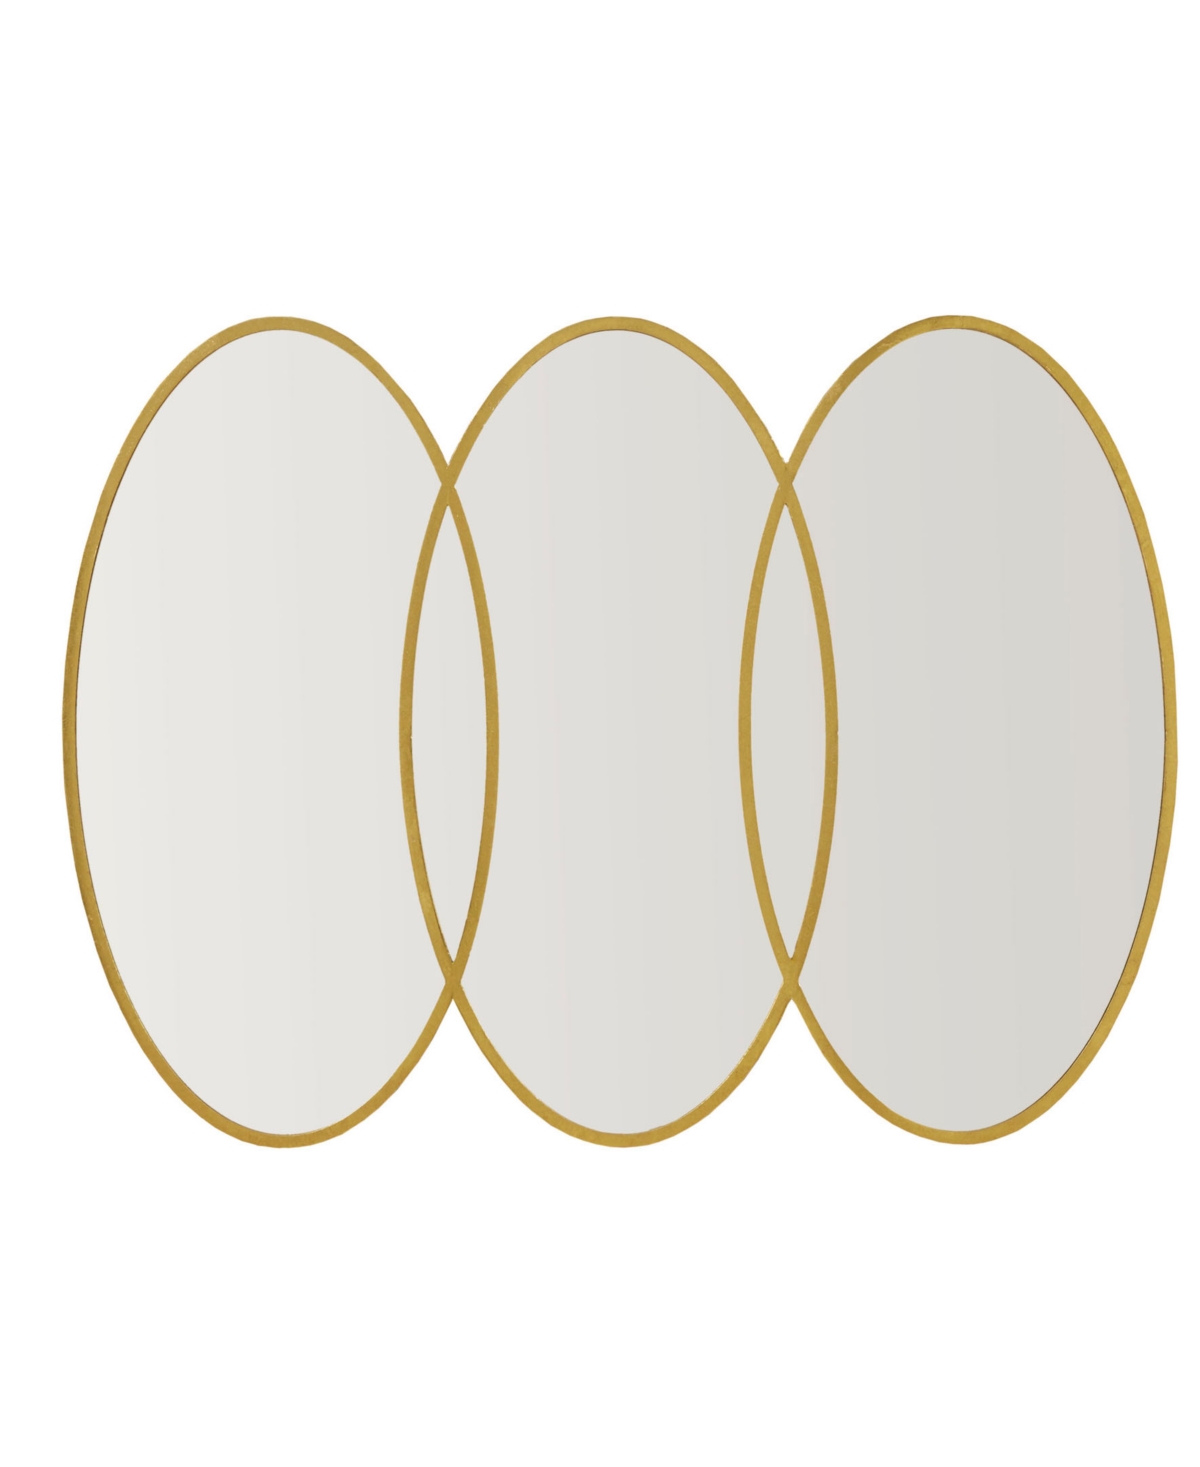 Eclipse Oval Wall Decor Mirror, 40" x 30" x 1.77" - Gold-Tone